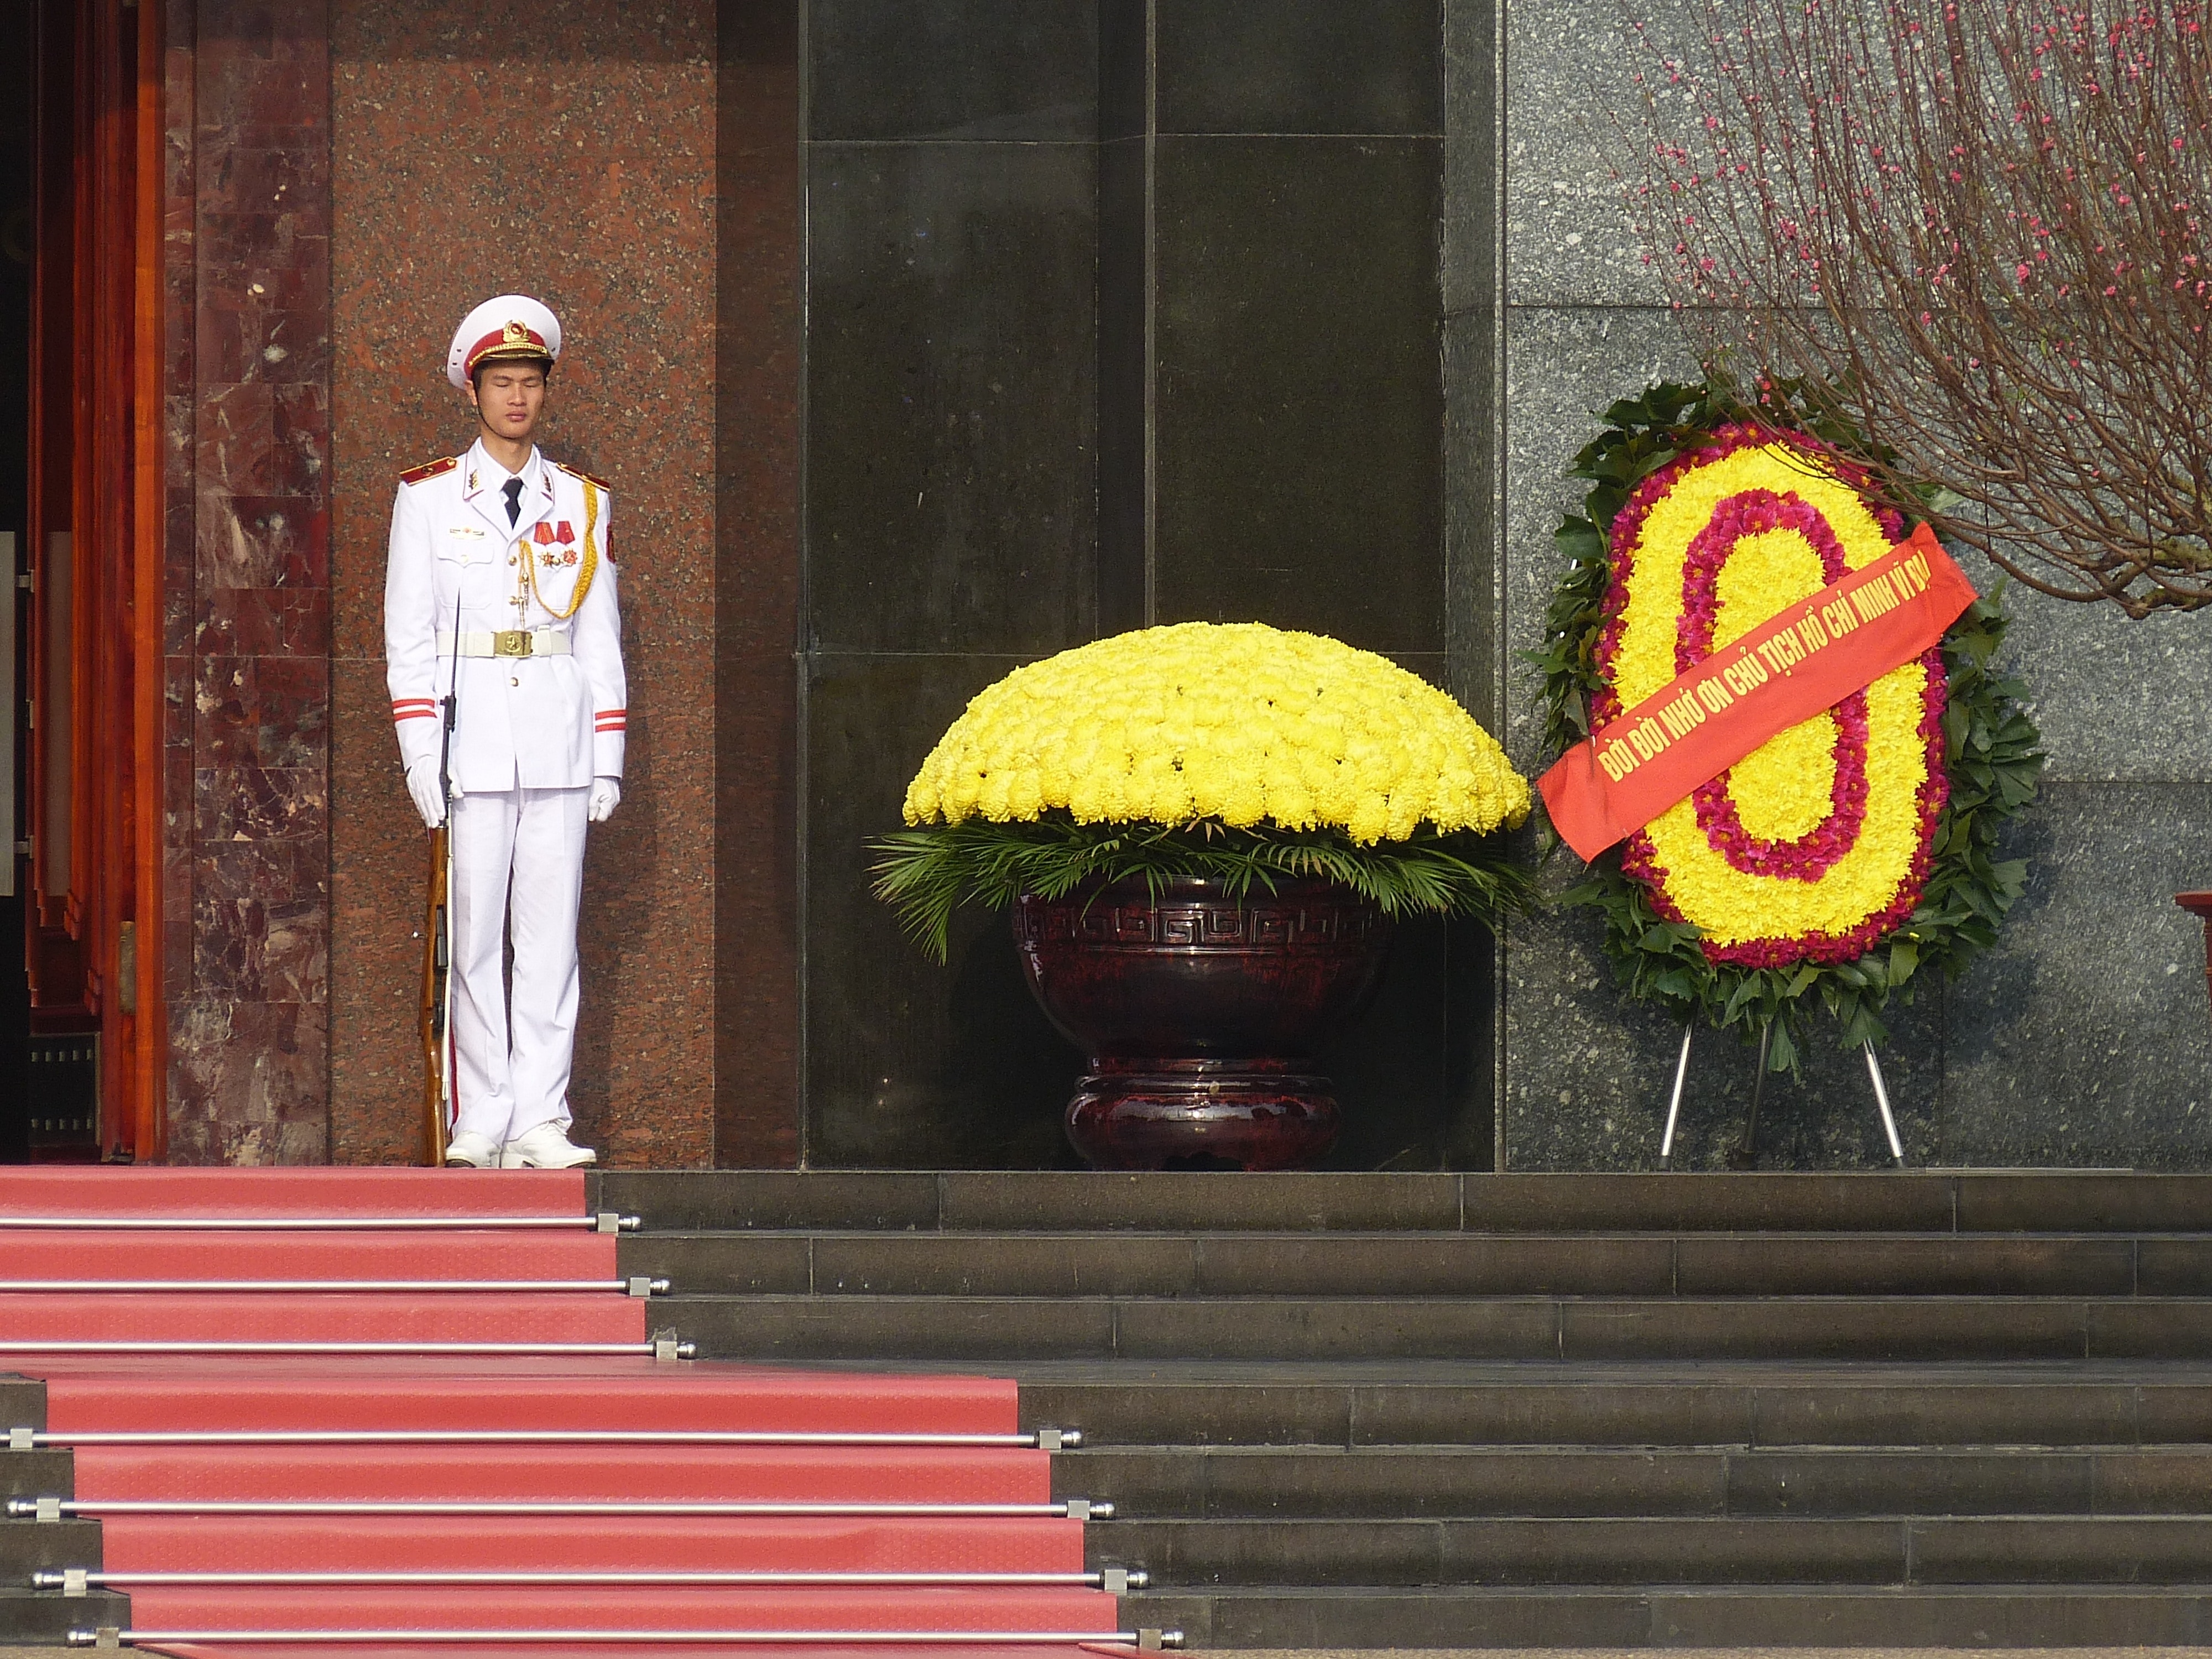 men's white military uniform near yellow flower decoration during daytime